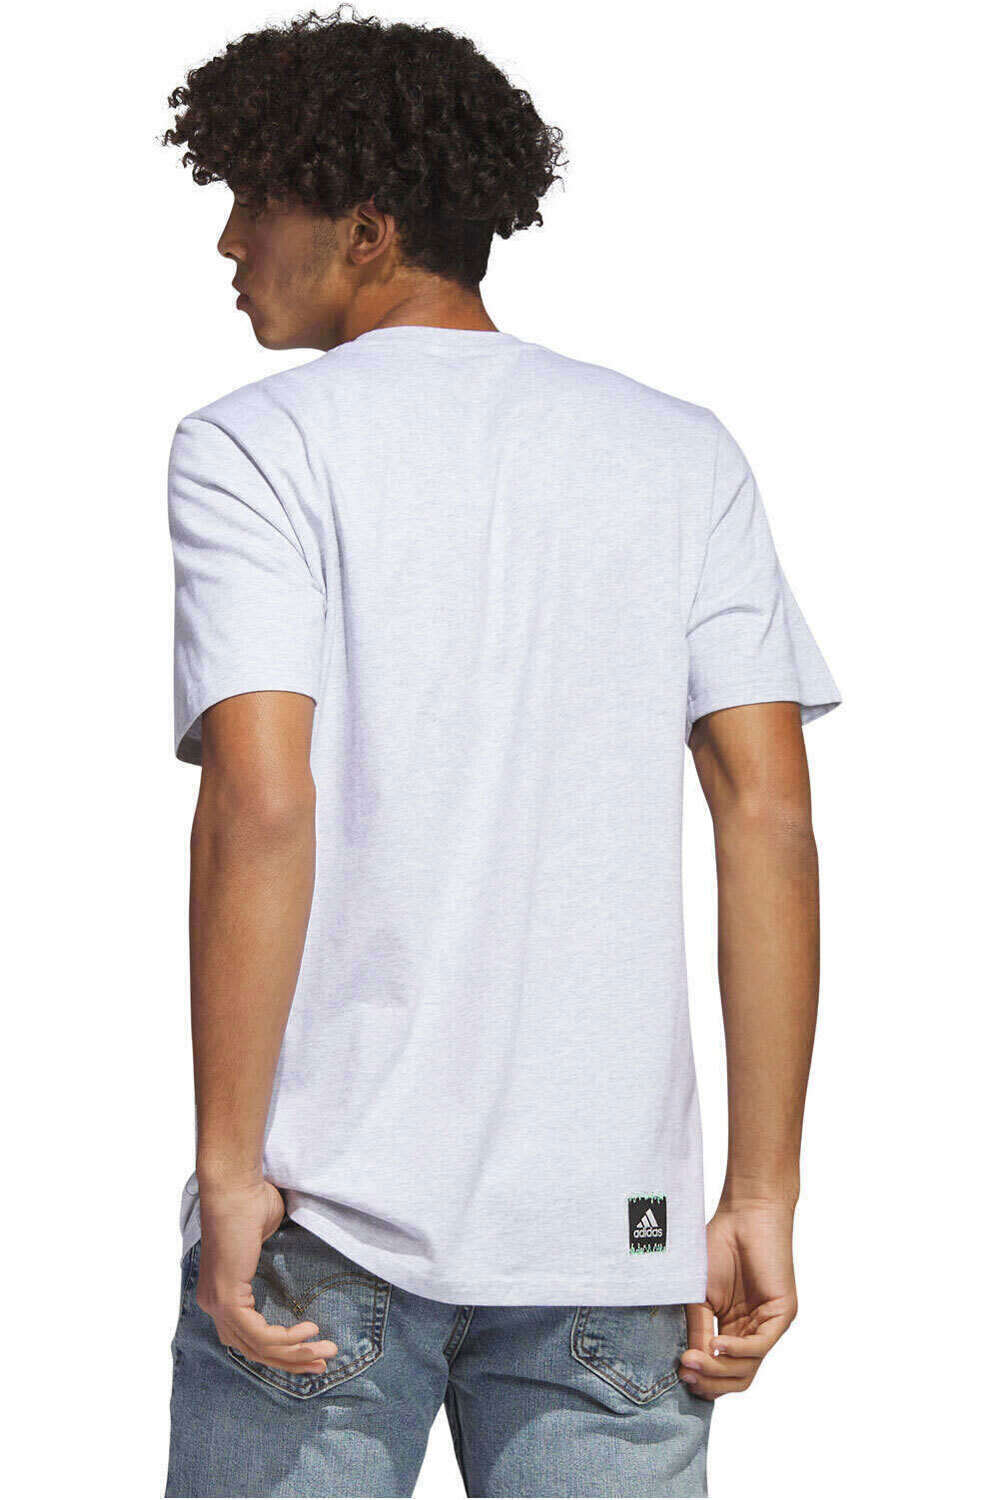 adidas camiseta manga corta hombre Power Logo Graphic vista trasera